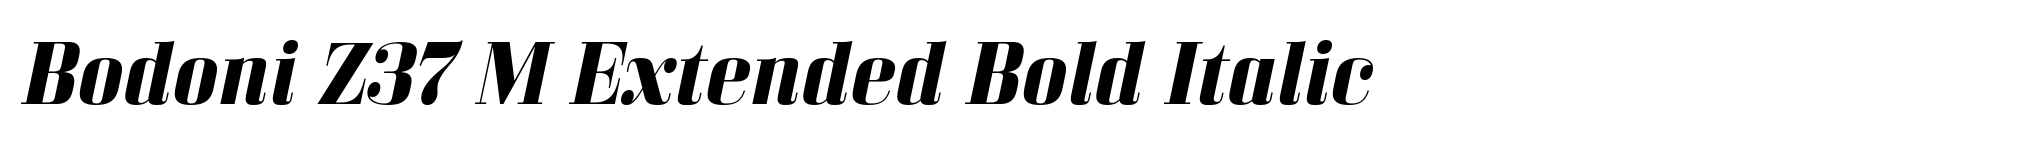 Bodoni Z37 M Extended Bold Italic image